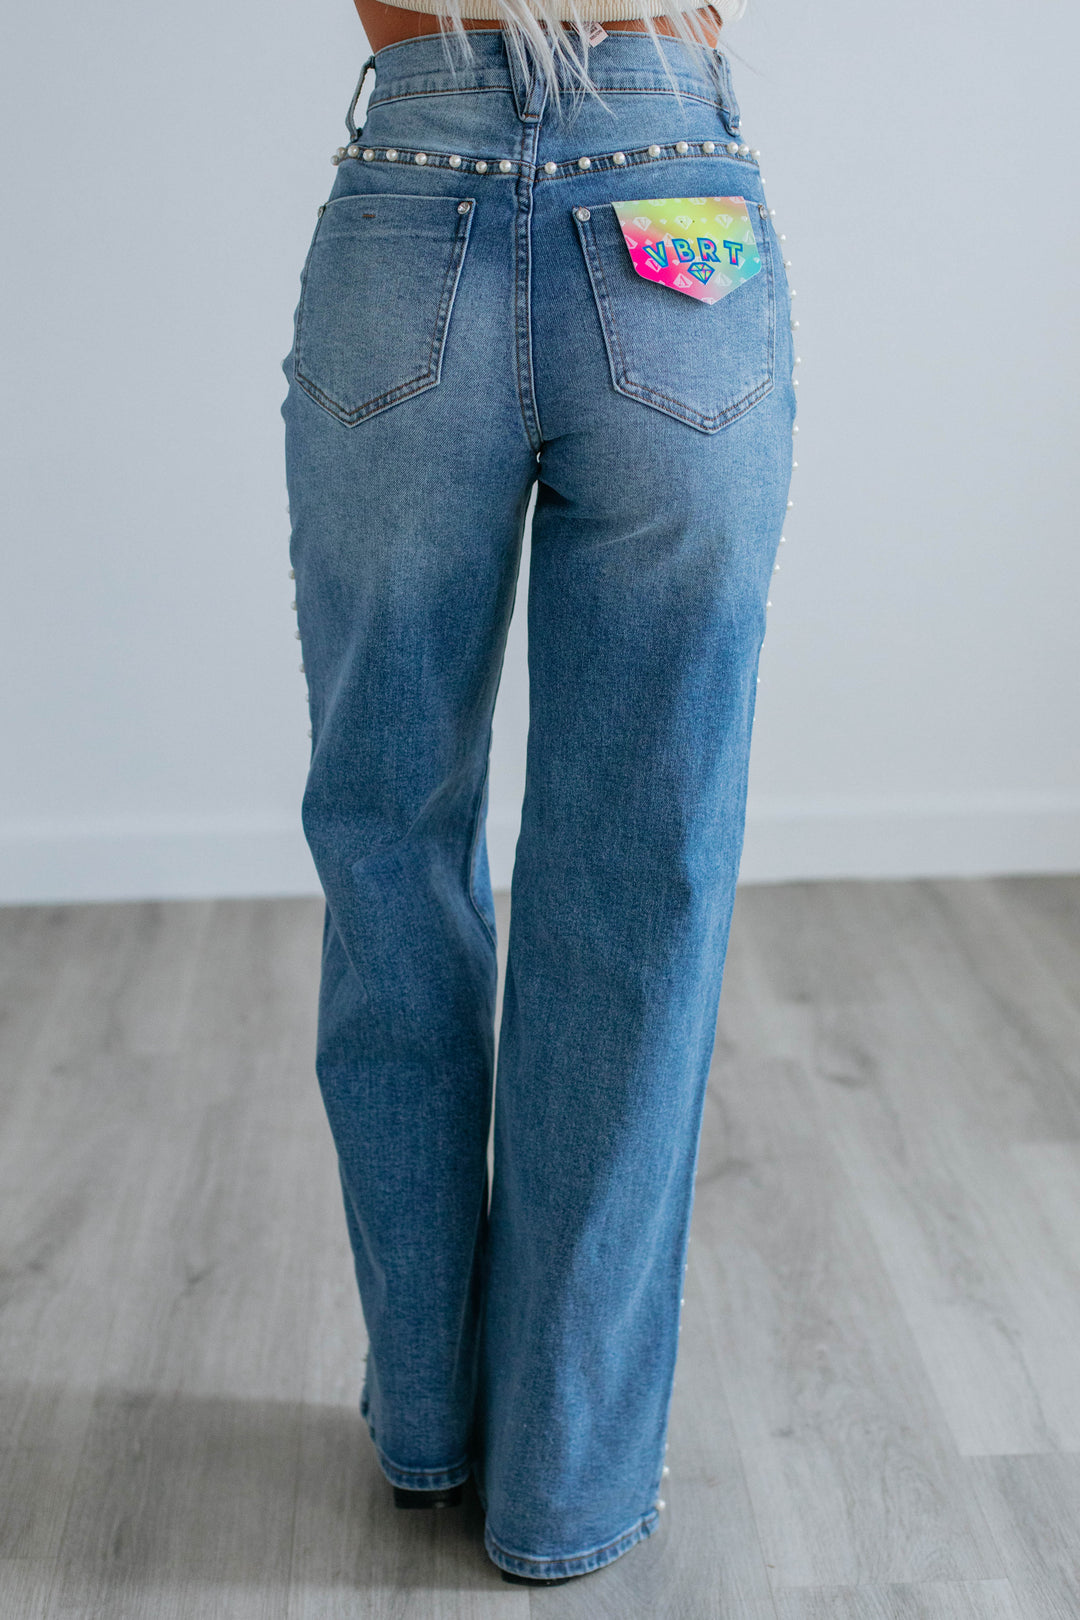 Kashara Pearl Studded Jeans